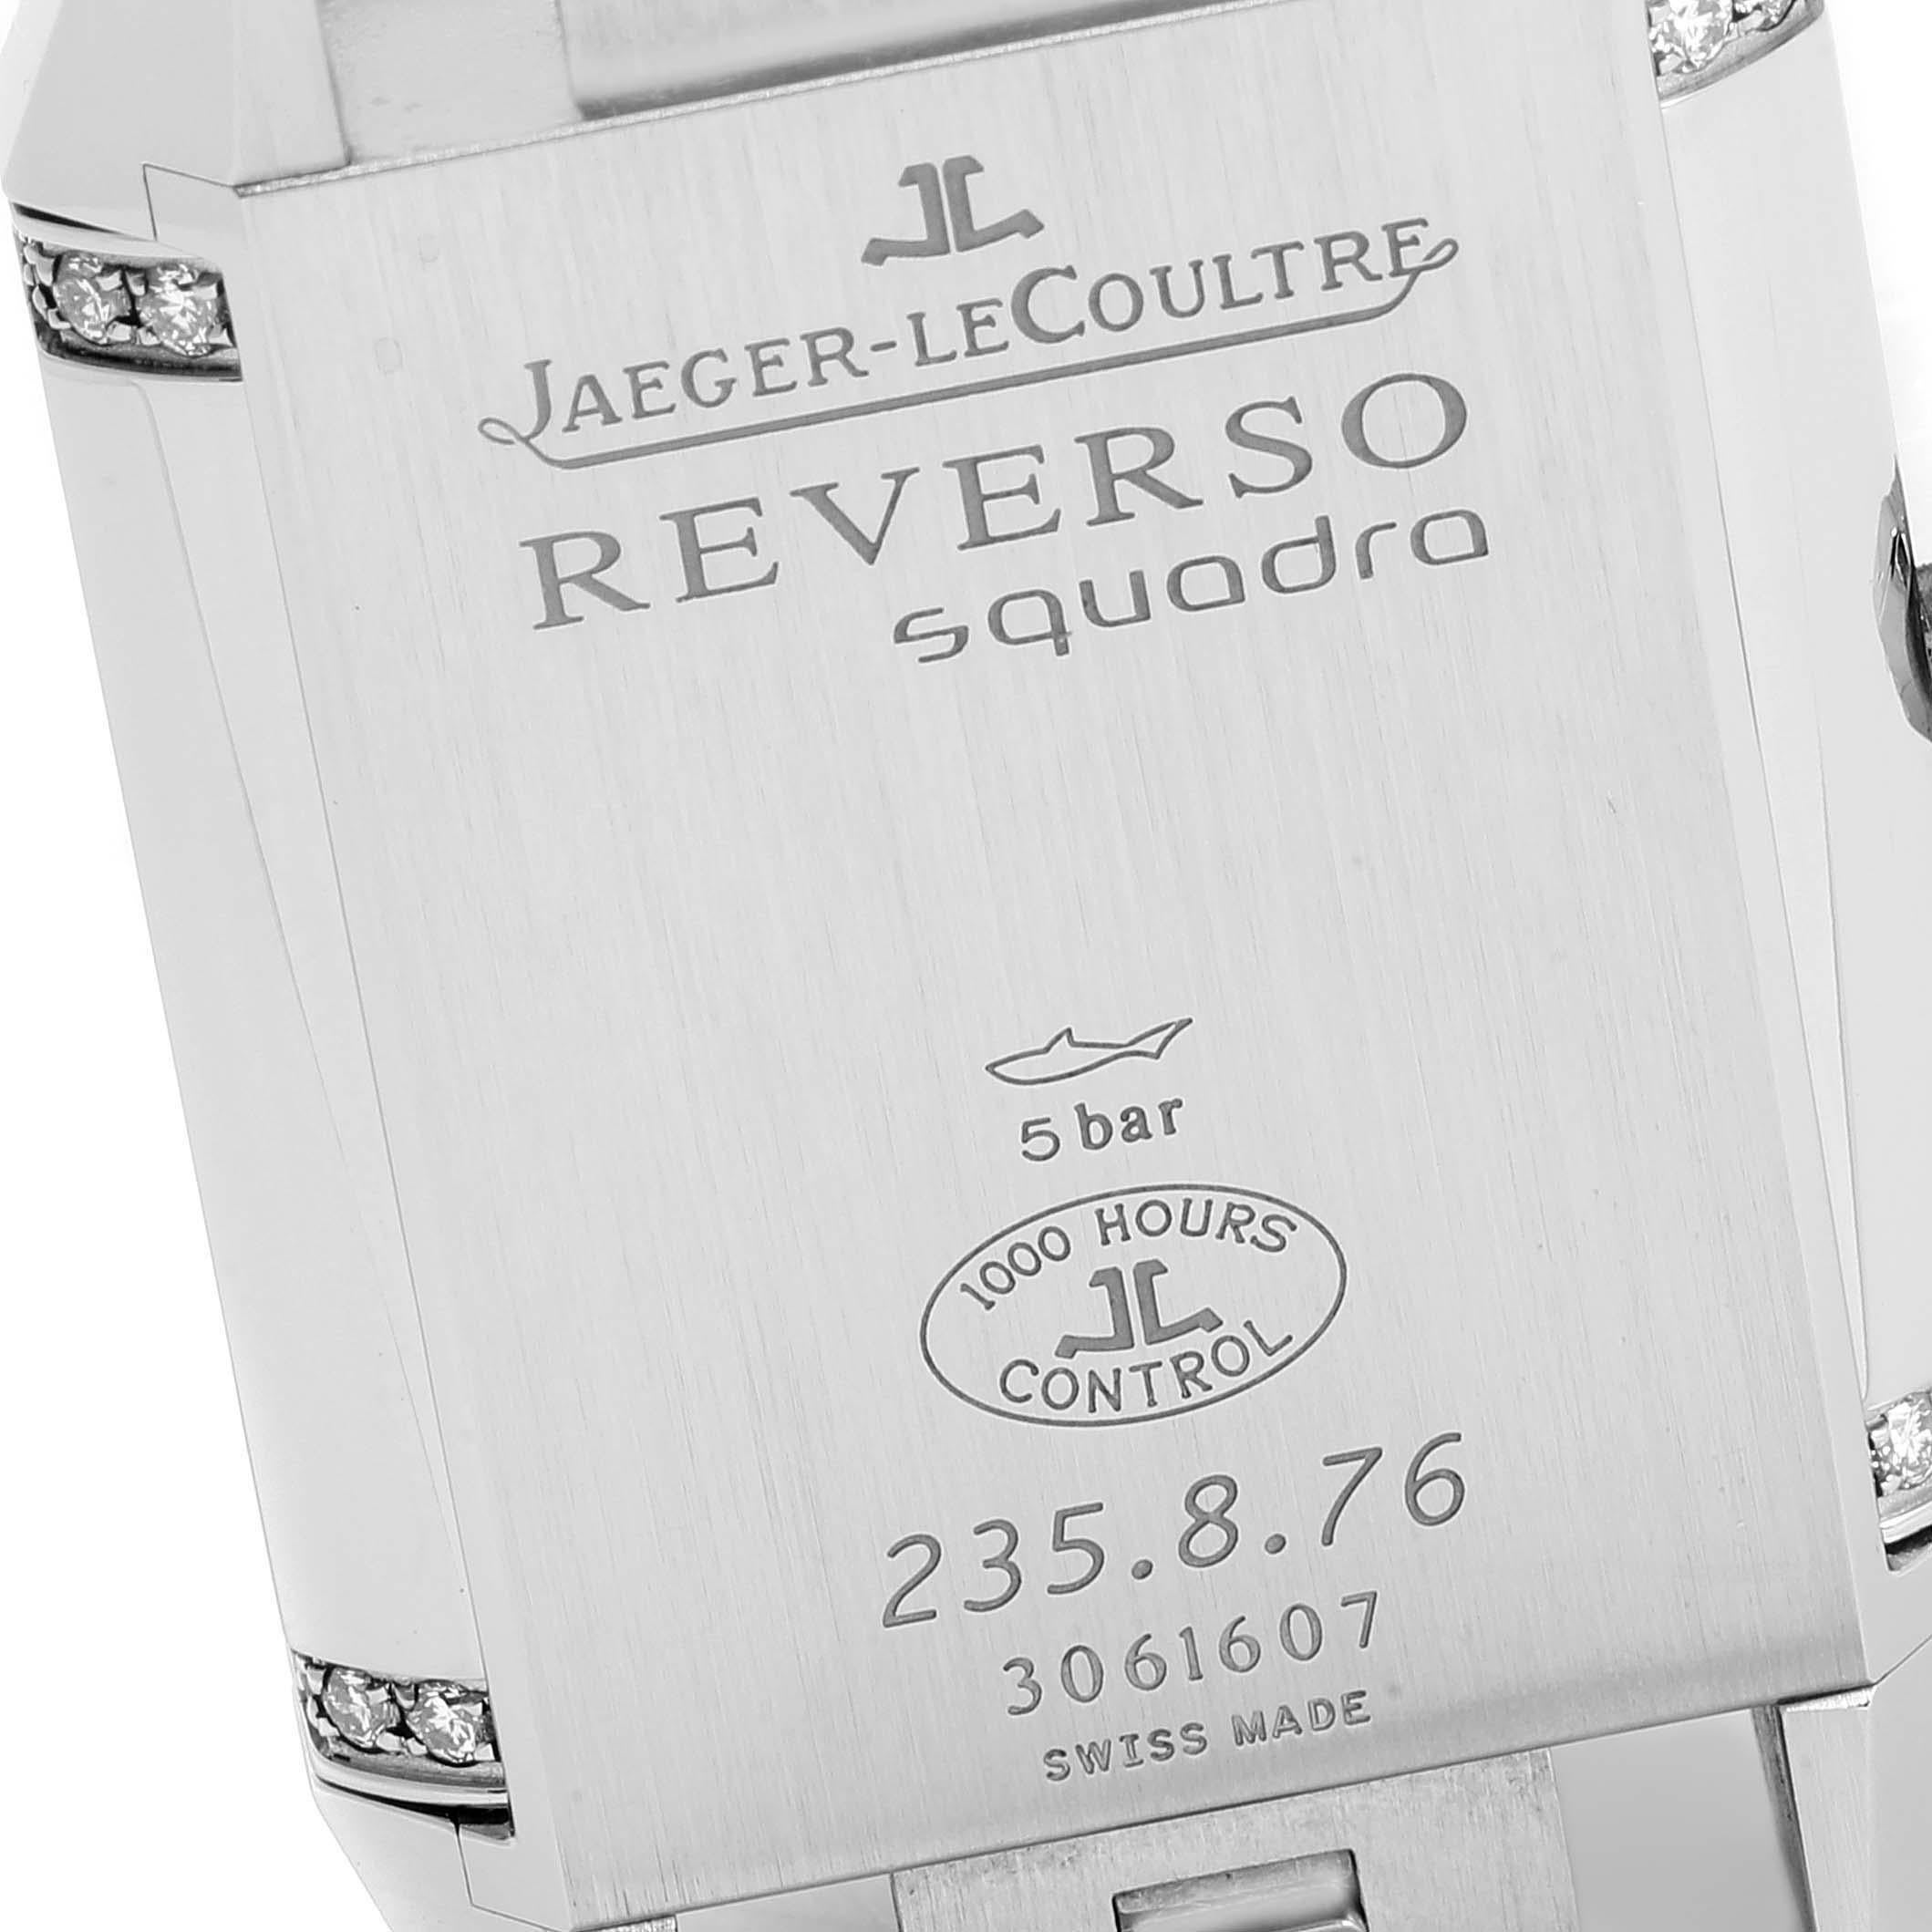 Jaeger-LeCoultre Reverso Squadra Duetto Diamond Ladies Watch 235.8.76 Q7058430 4